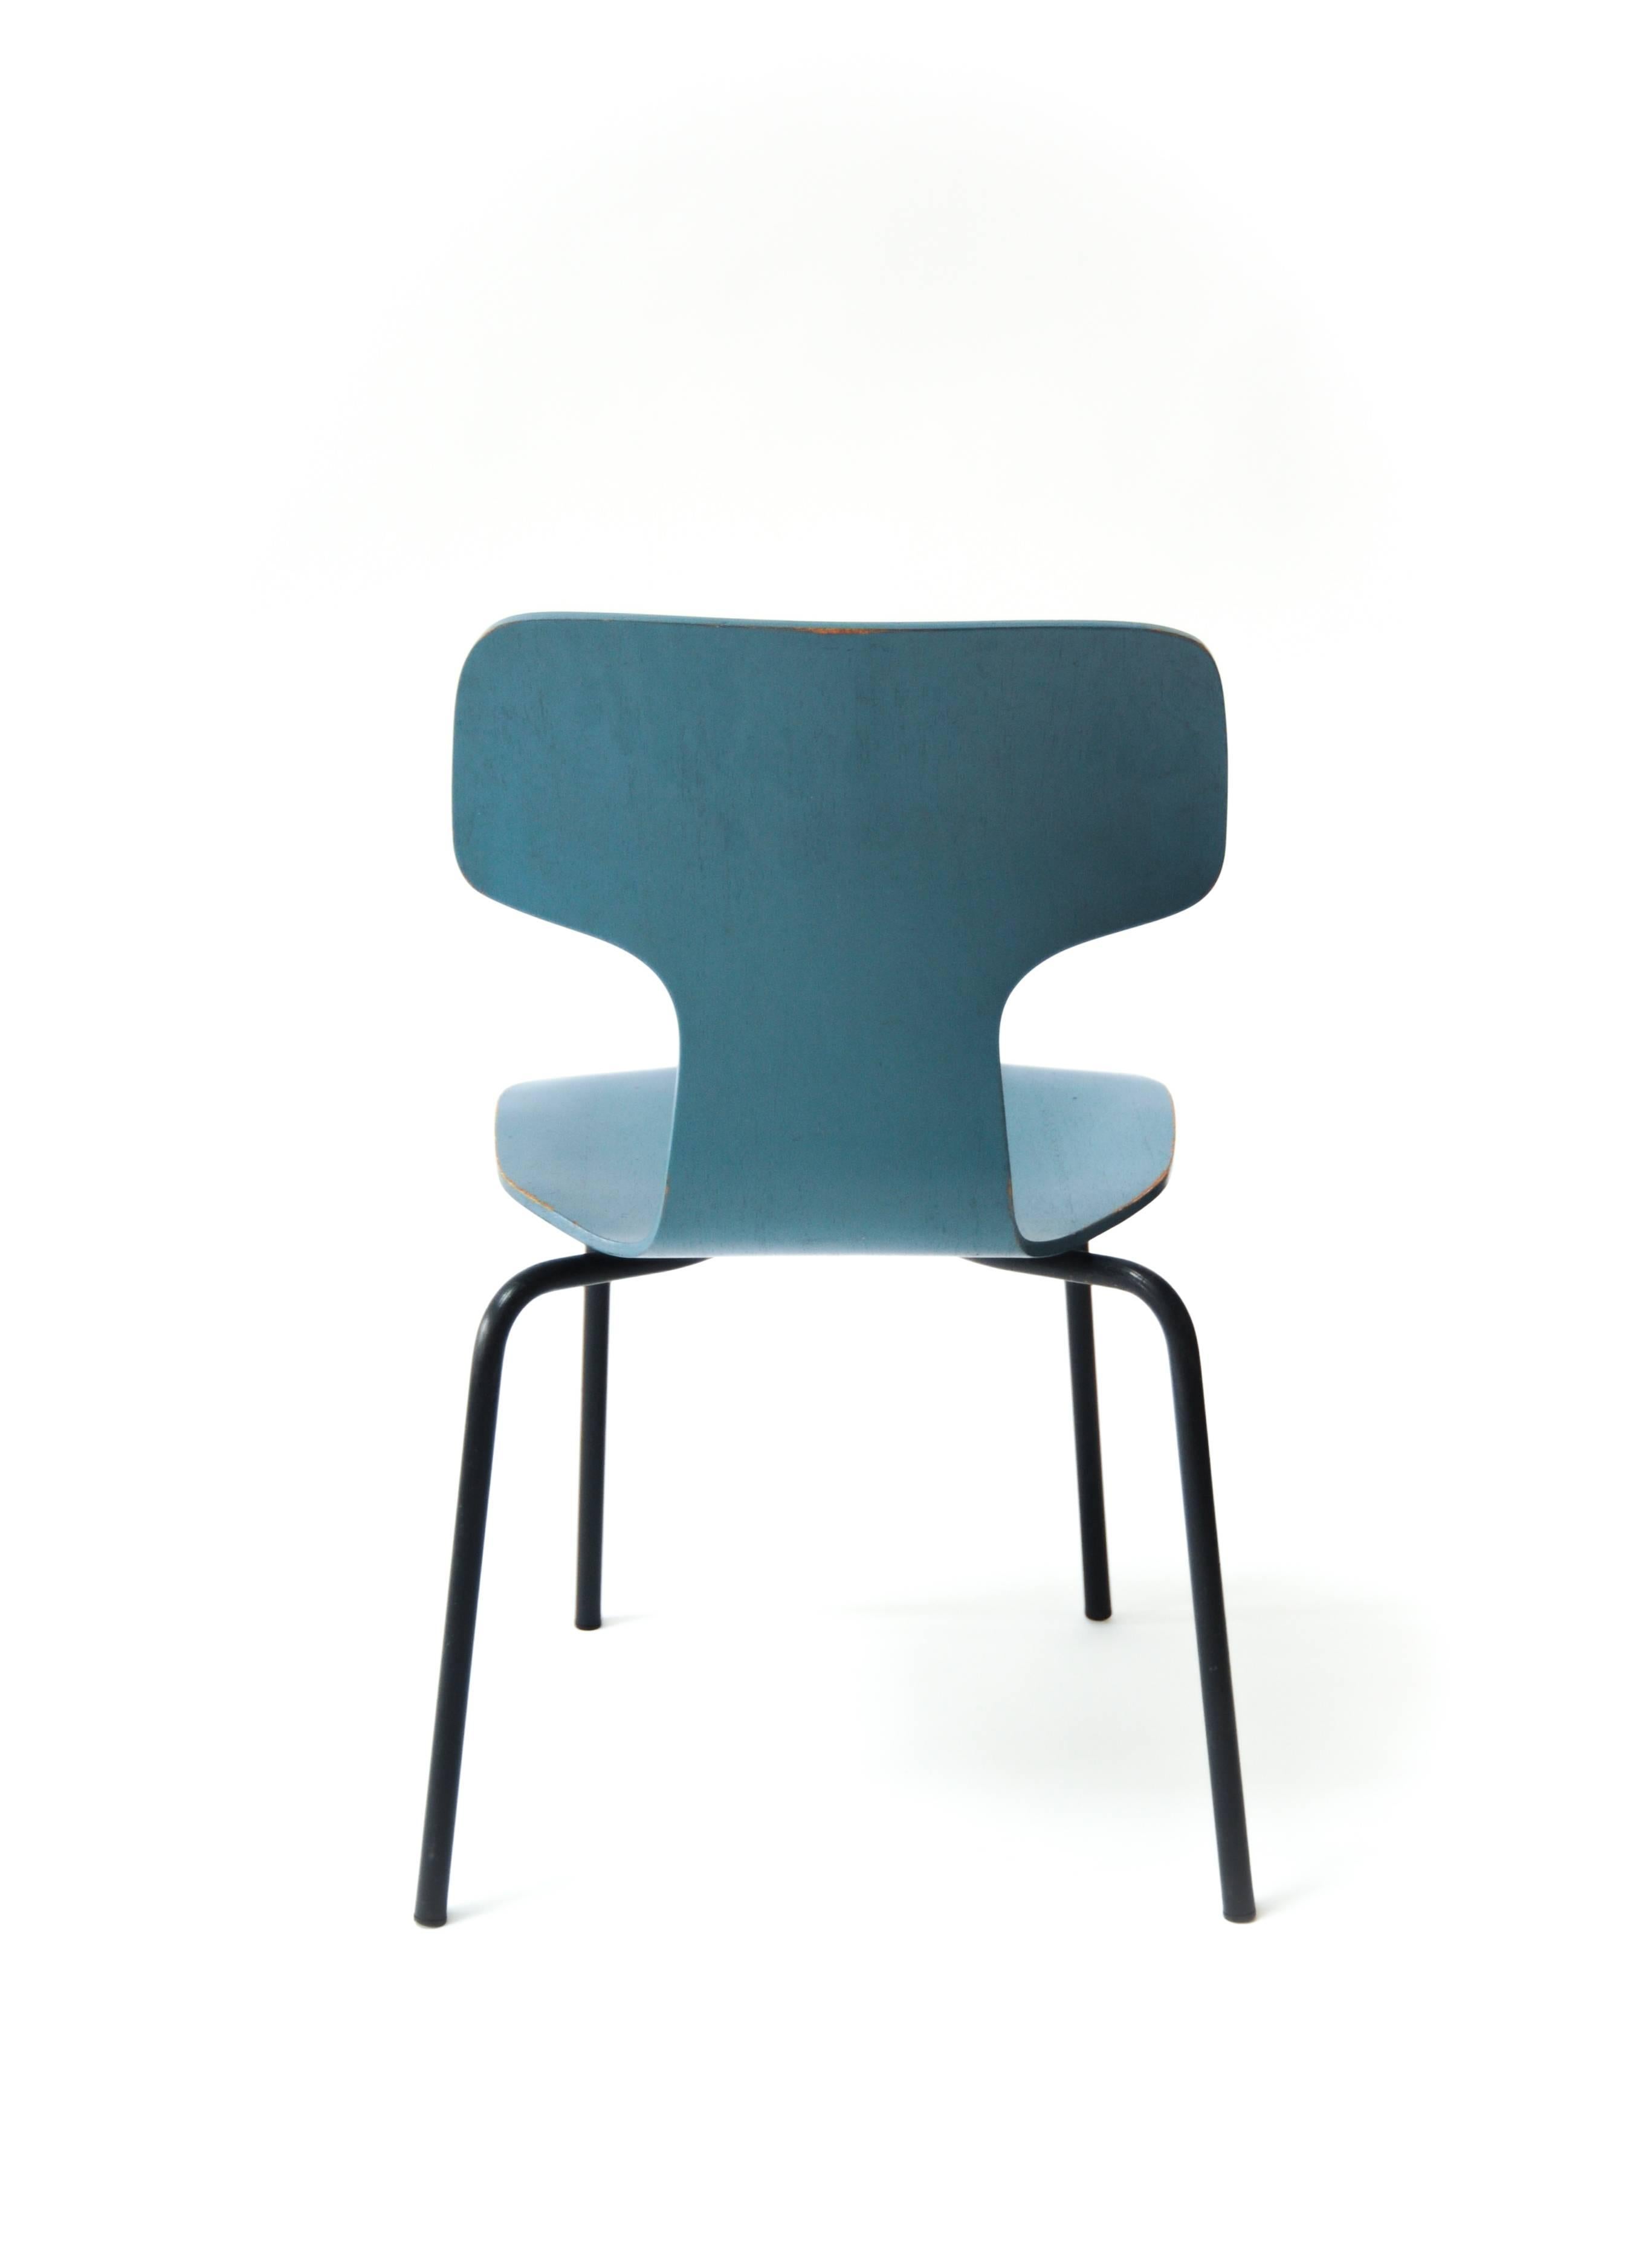 Molded Pair of Model 3103 Chairs, Designed by Arne Jacobsen, Vintage, Denmark, 1955 For Sale